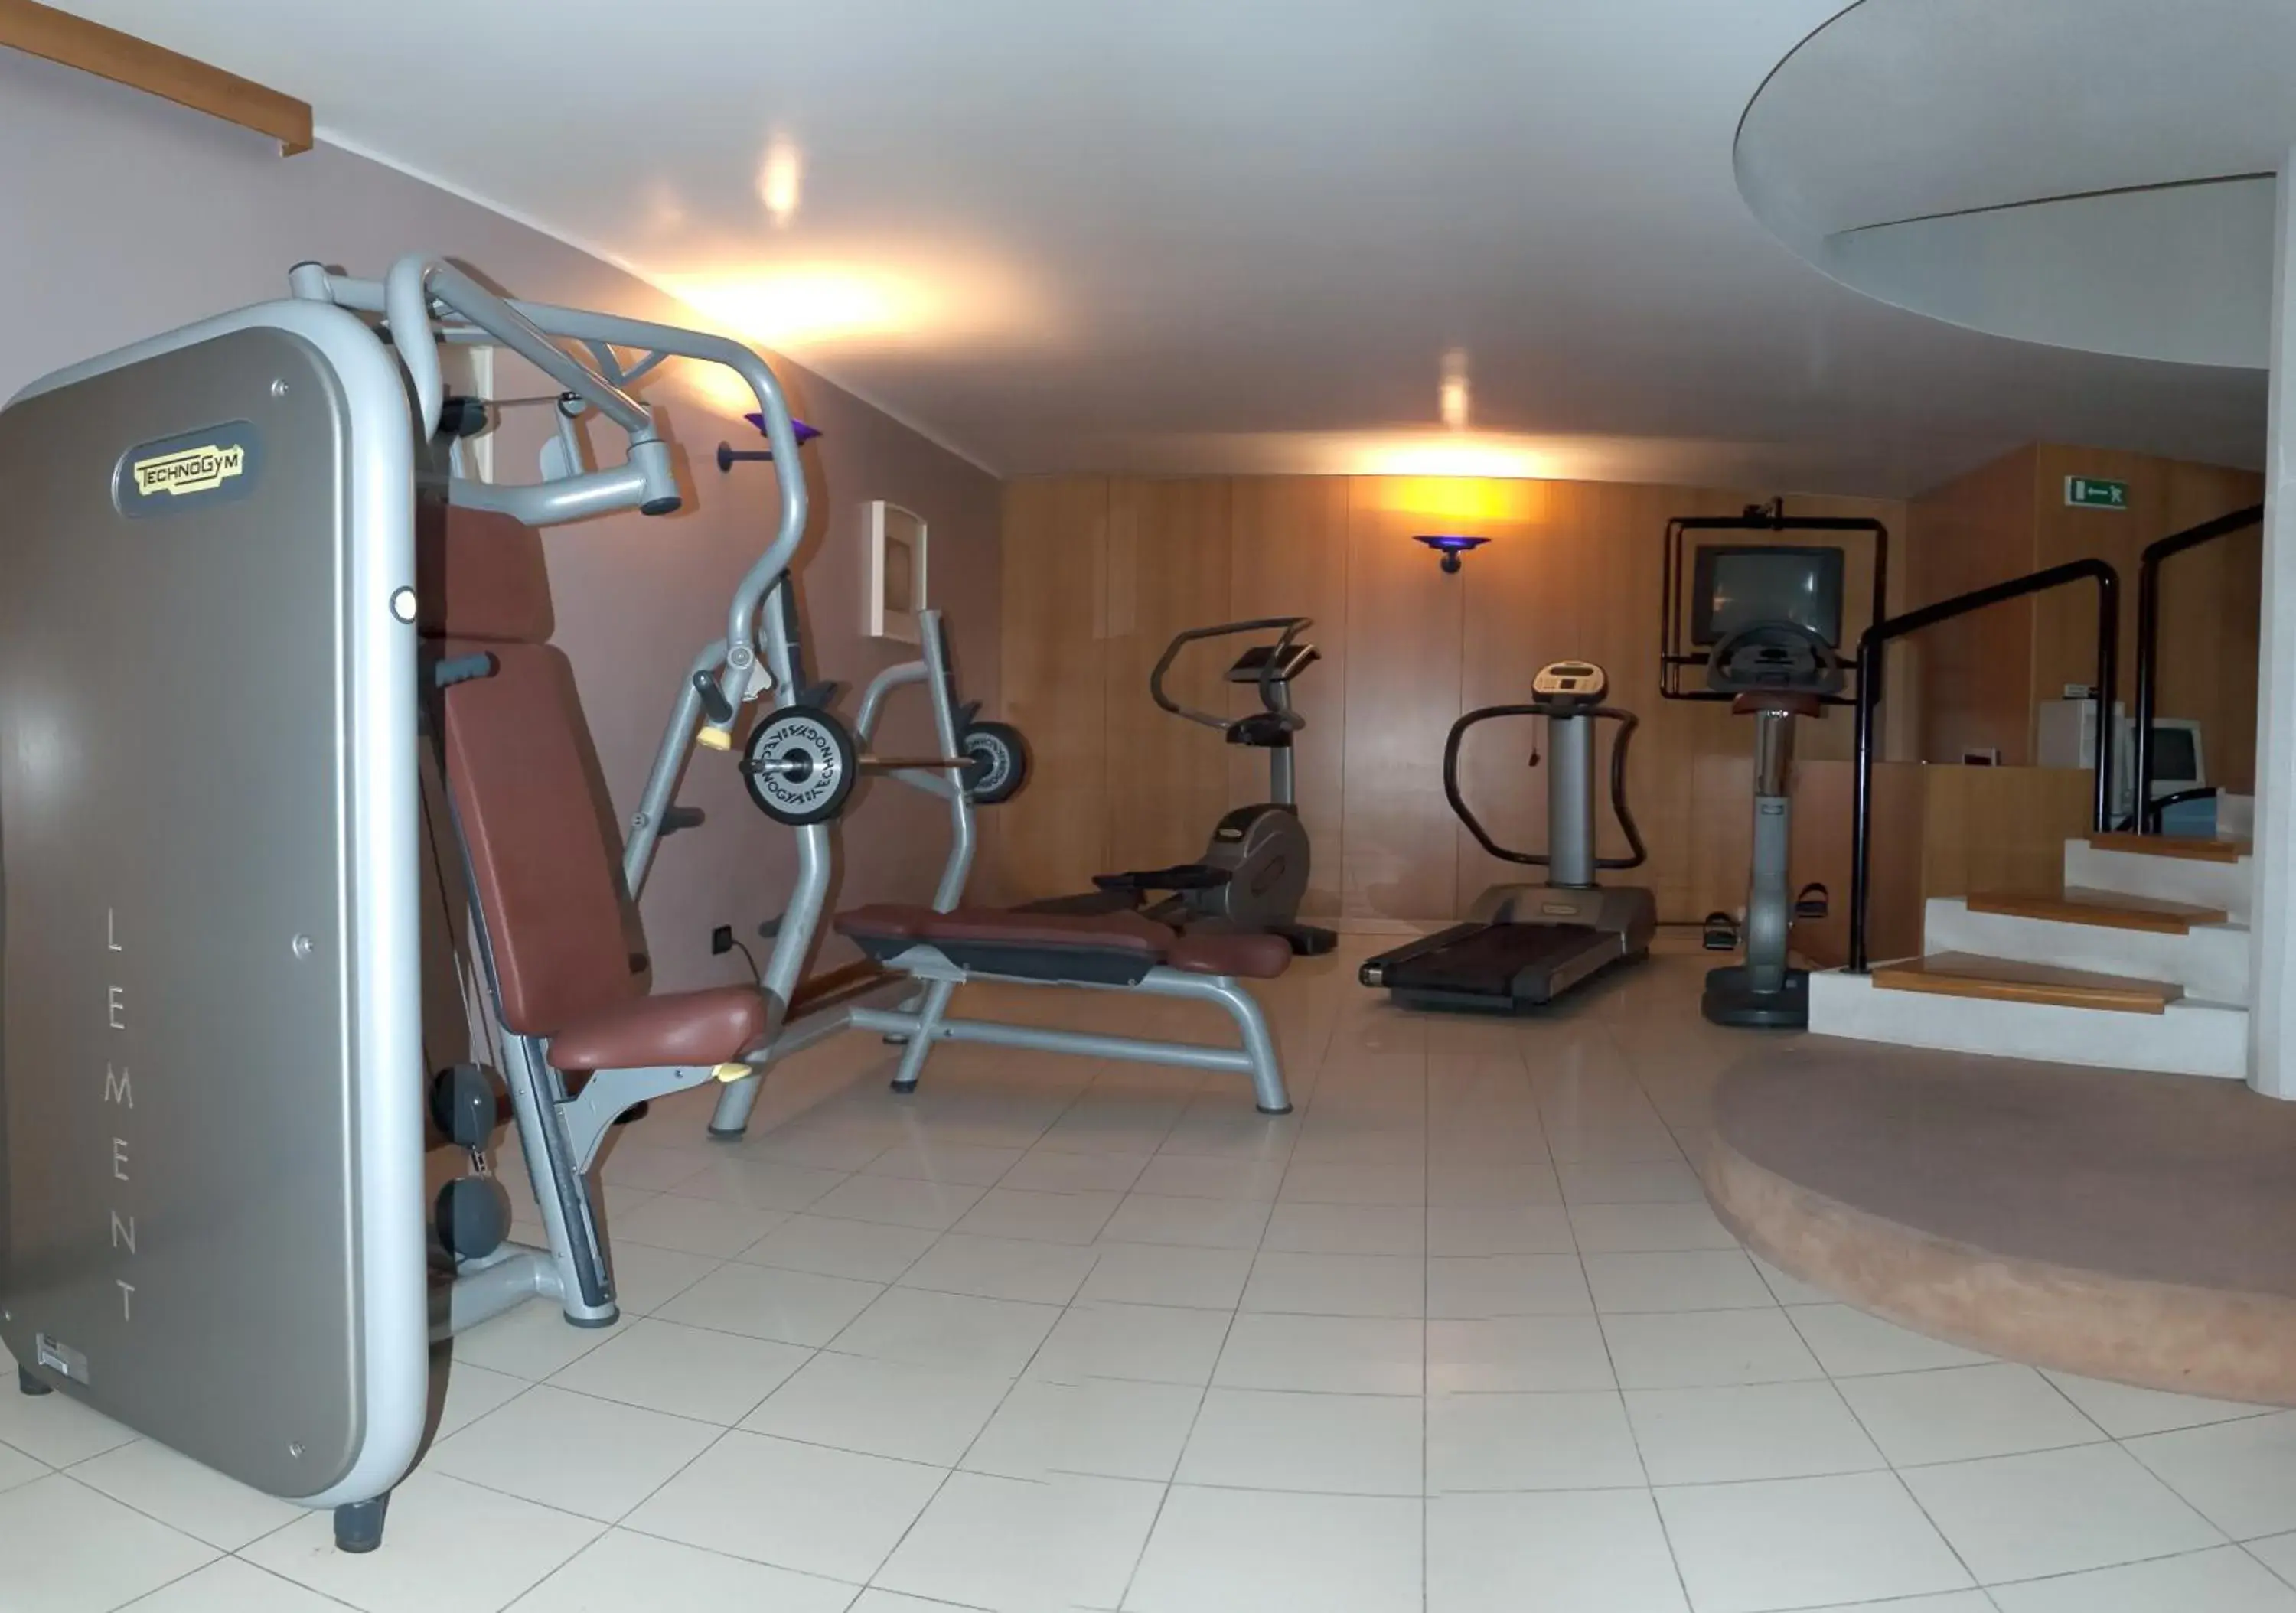 Fitness centre/facilities, Fitness Center/Facilities in Hotel Santiago